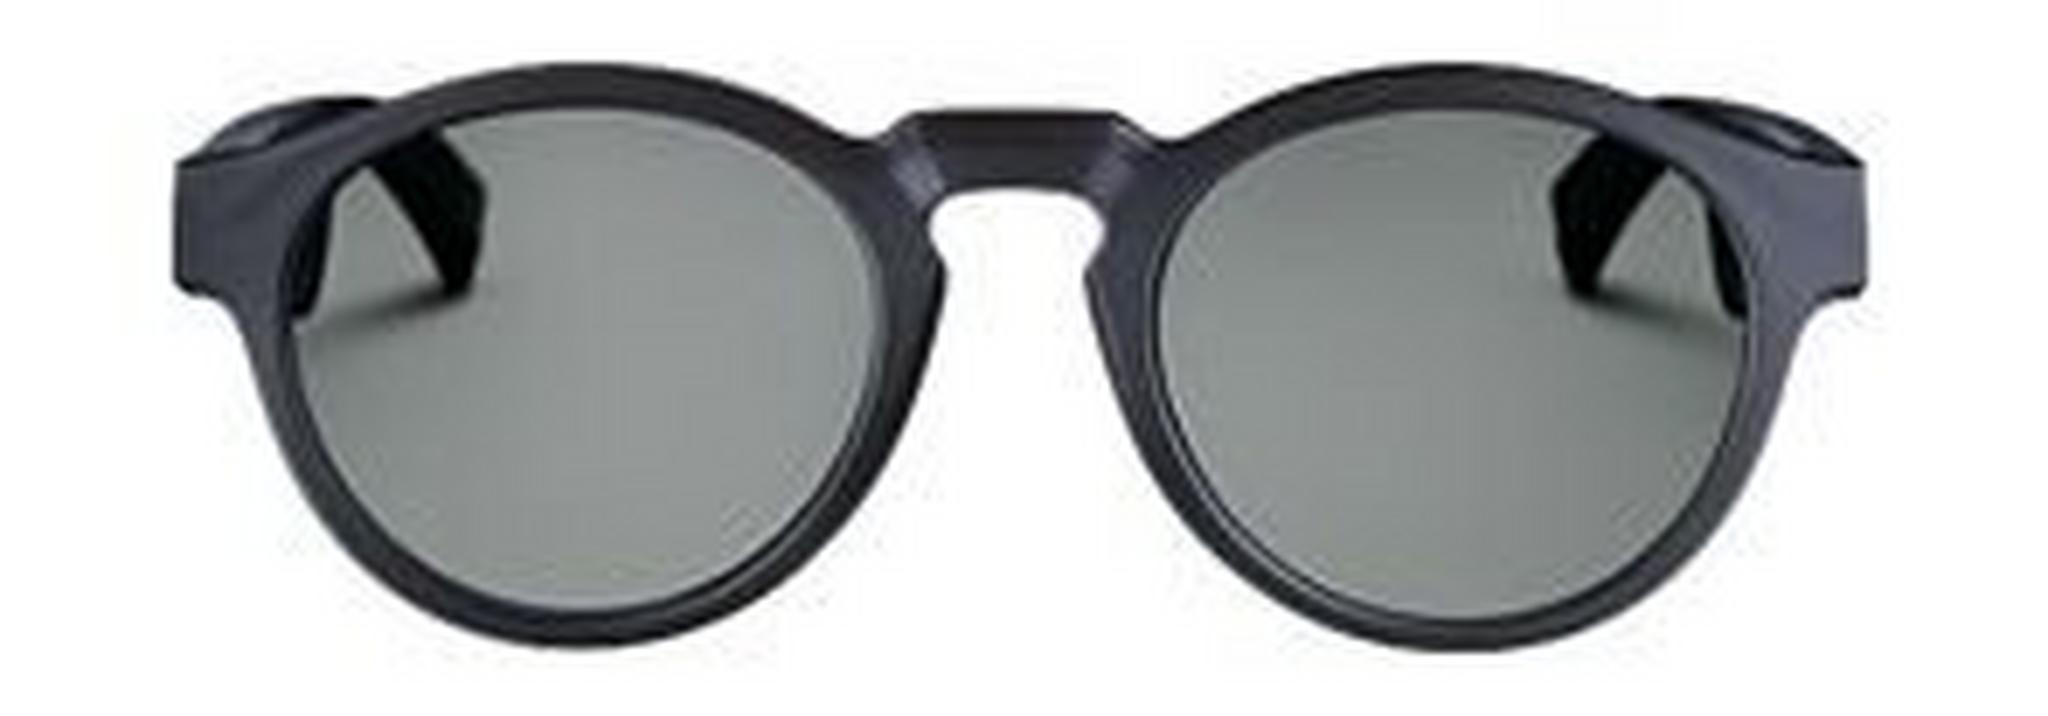 Bose Frames Audio Sunglasses - Rondo - Small/Medium